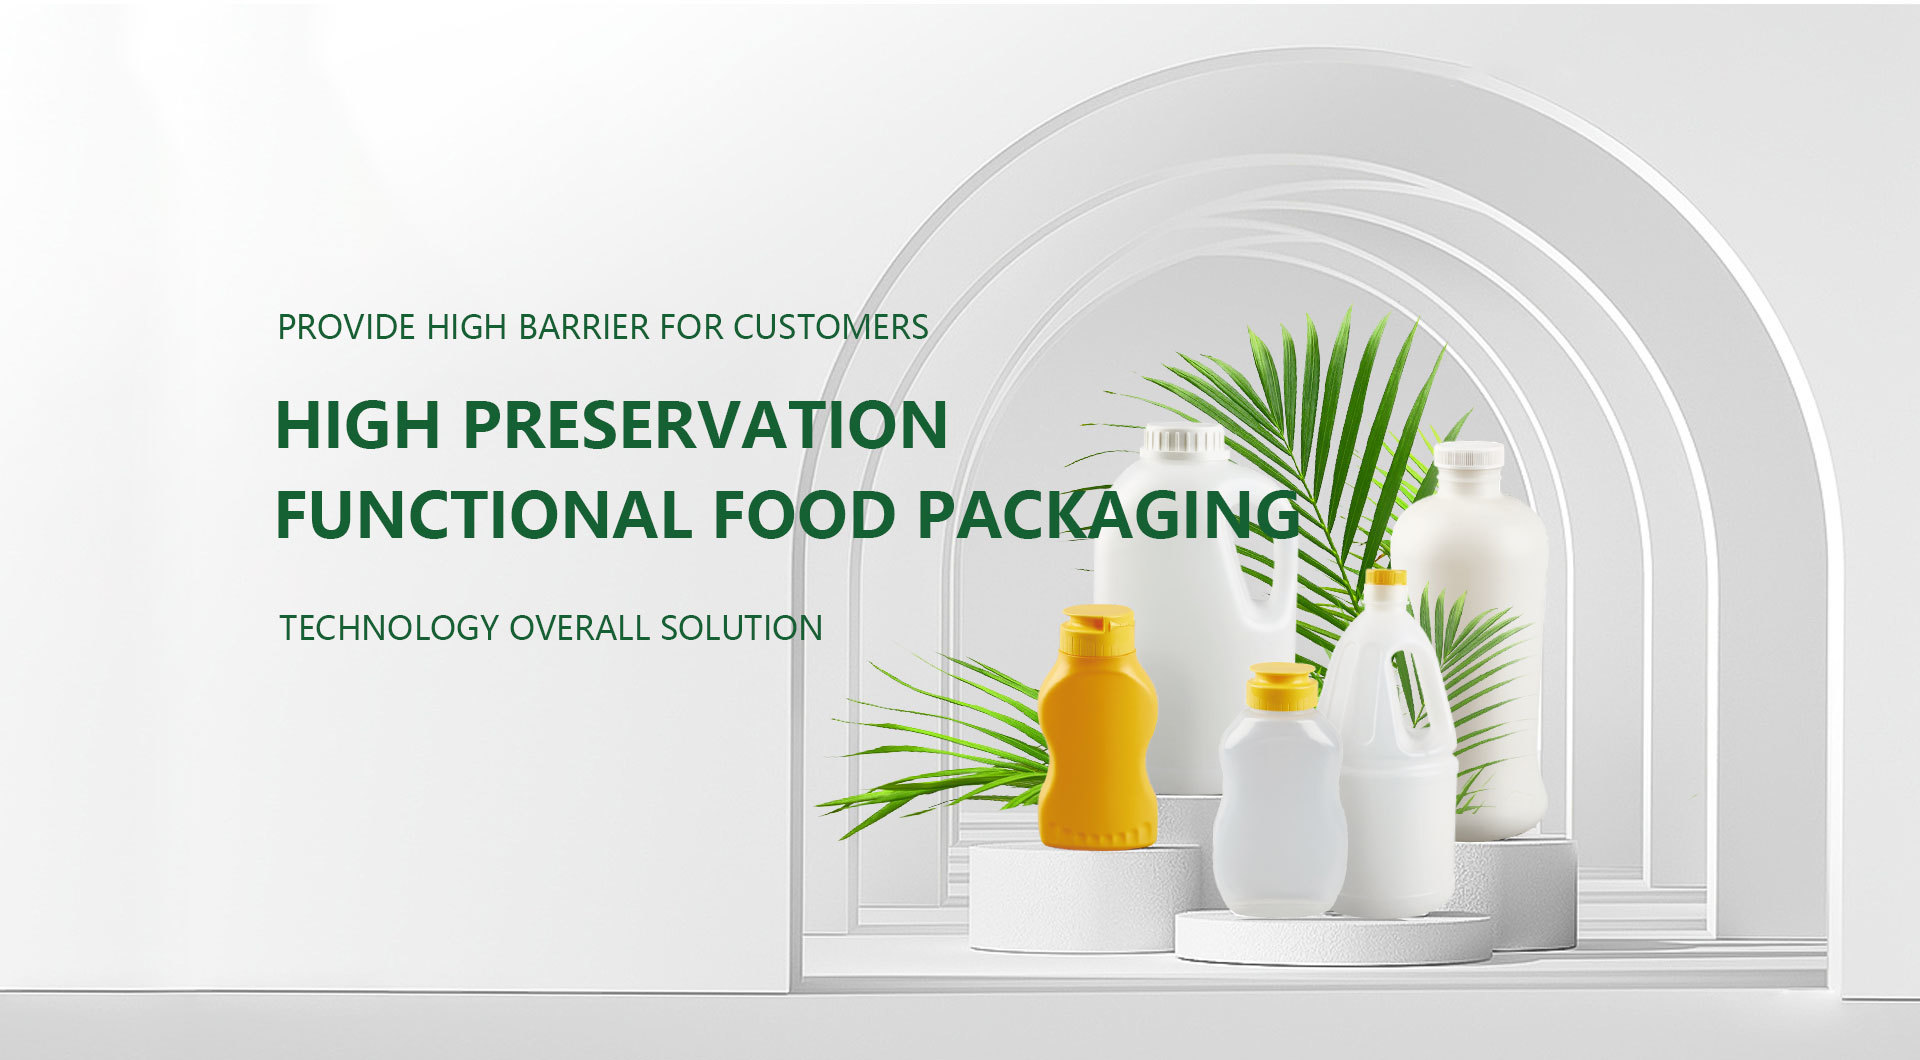 High preservation functional food packaging